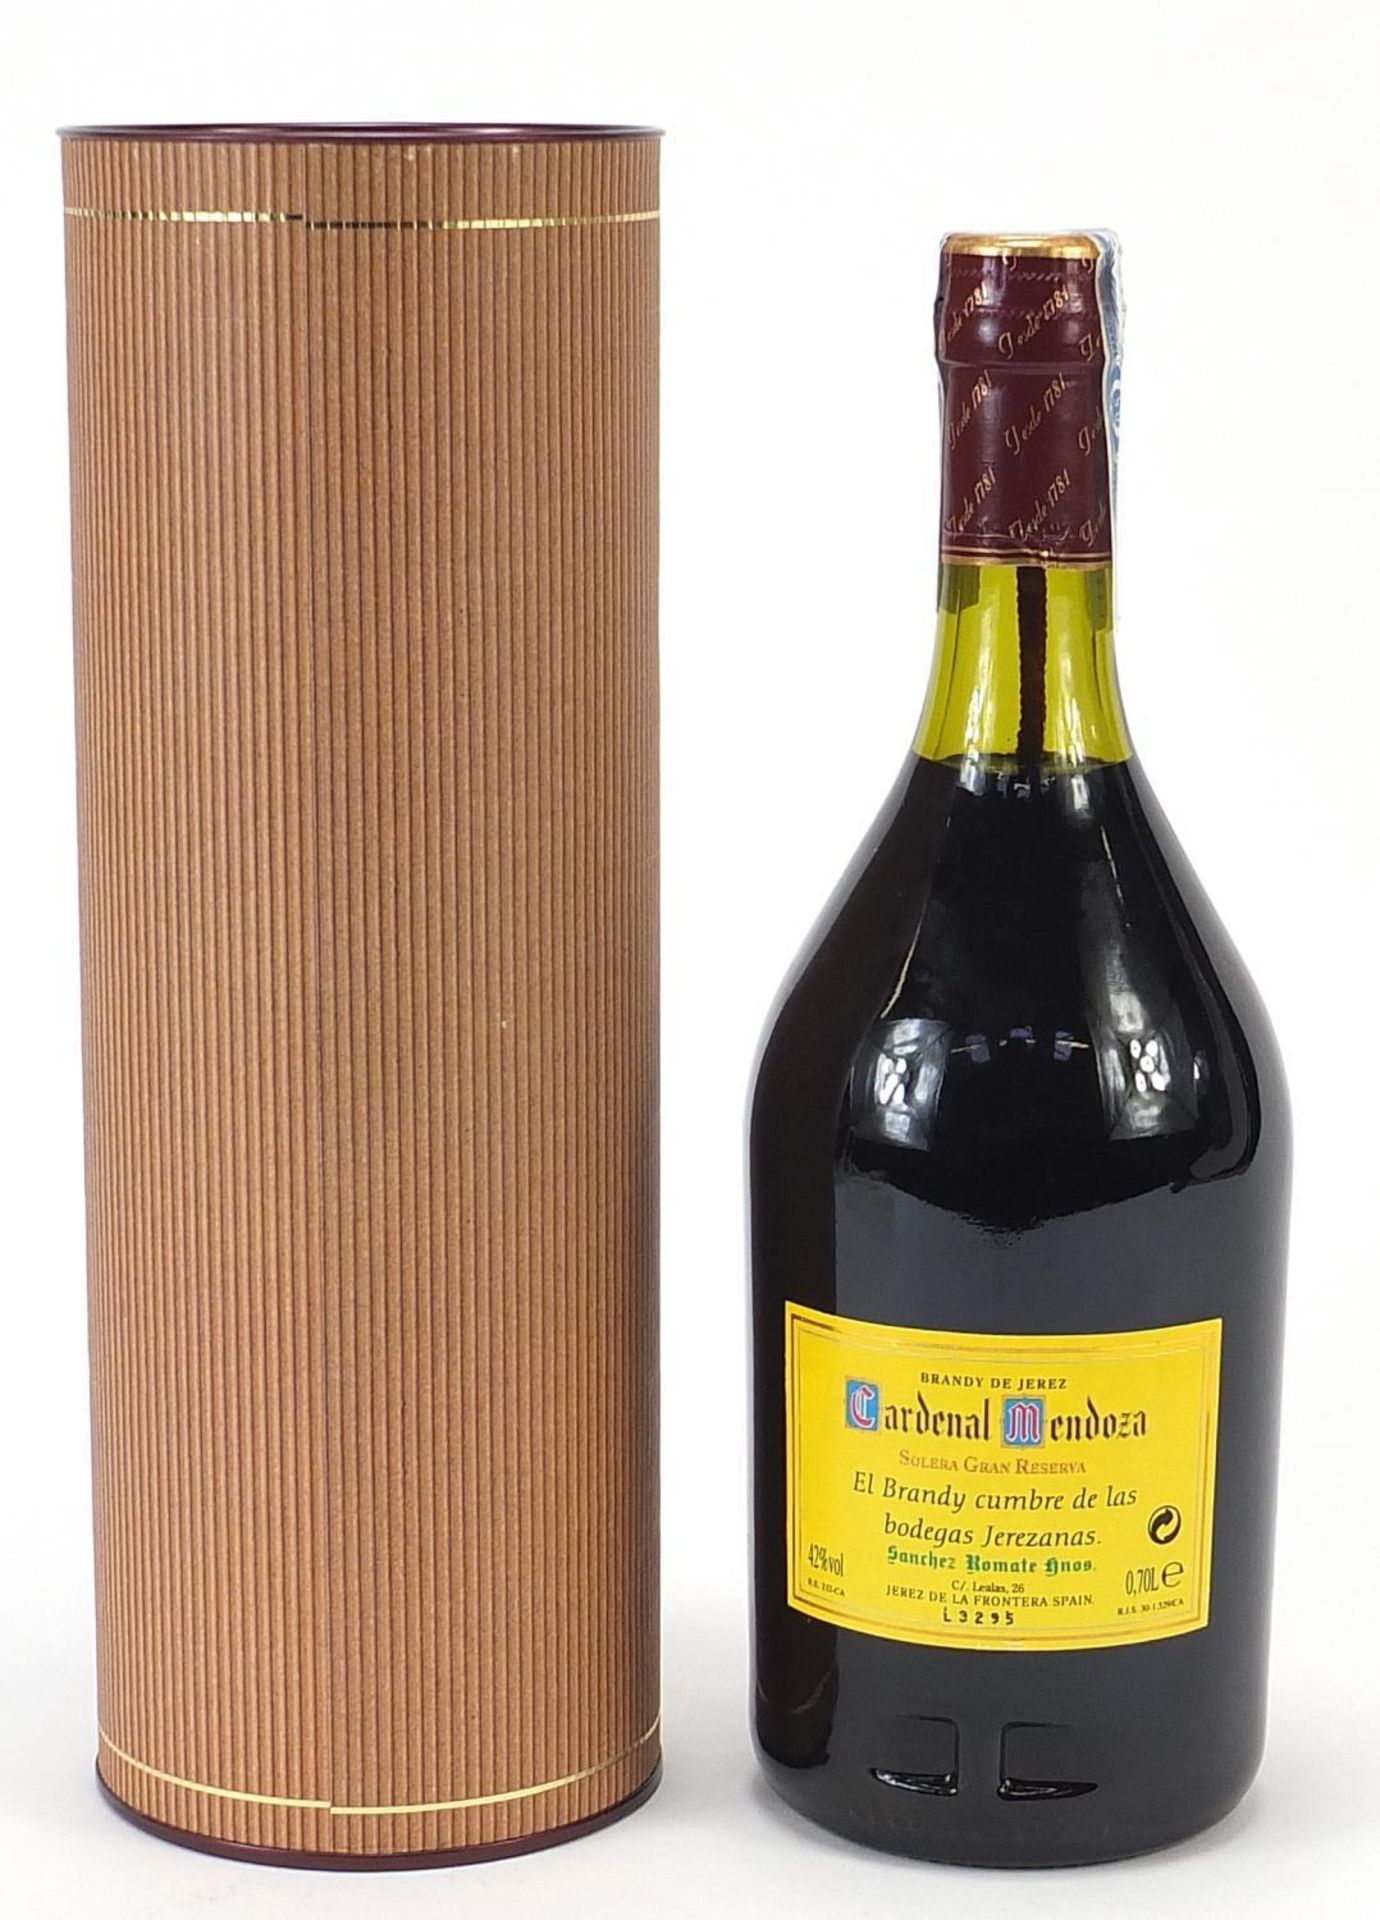 Bottle of Cardinal Mendoza Solera brandy - Image 2 of 2